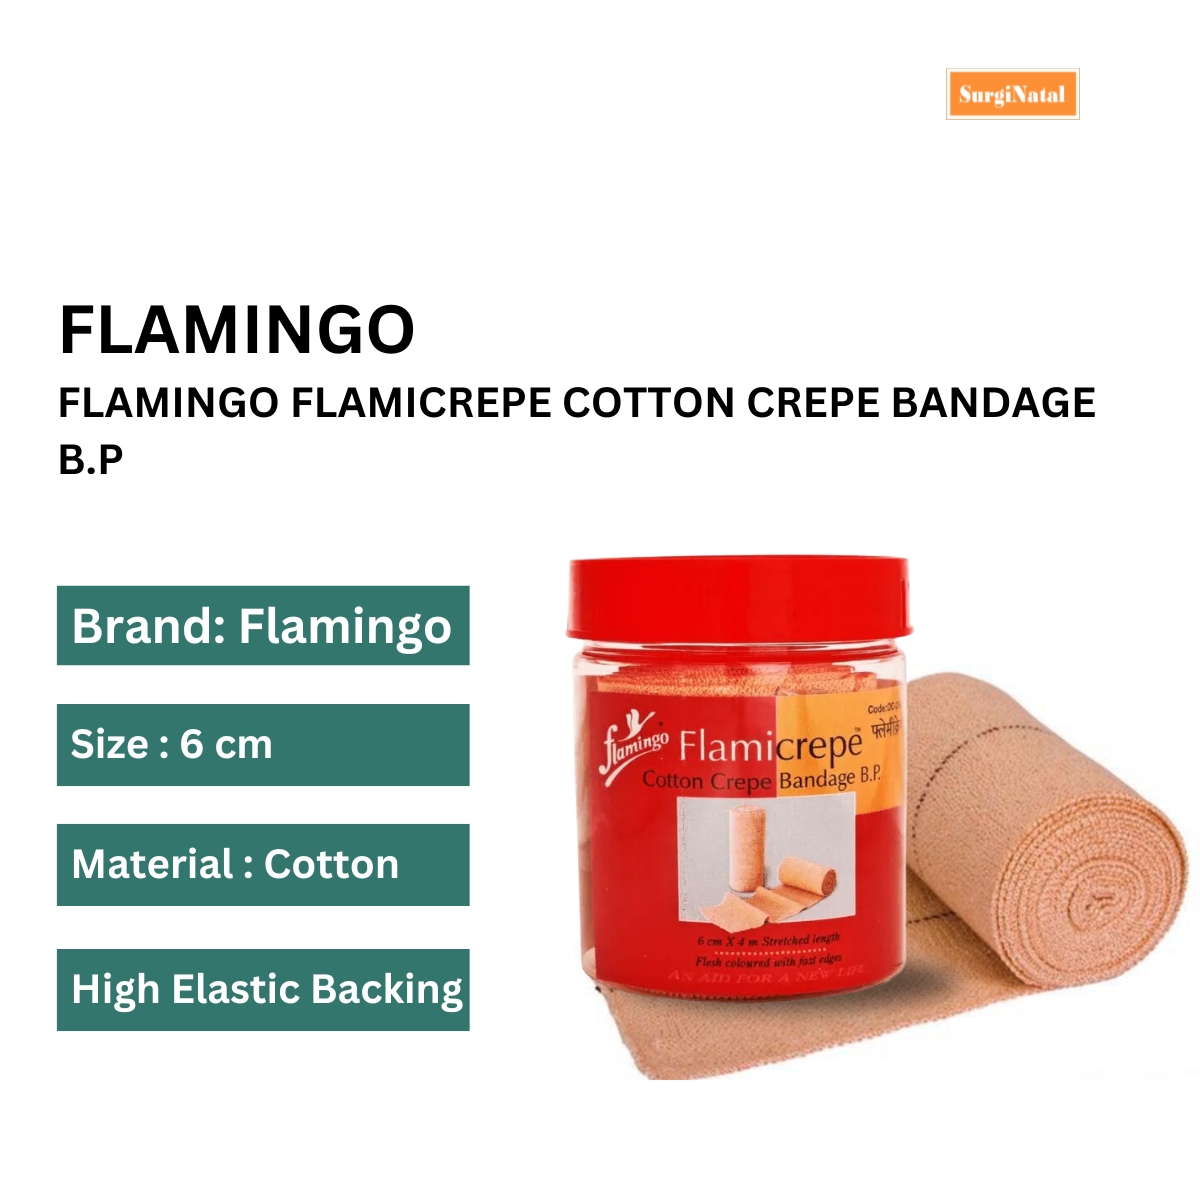 flamingo flamicrepe cotton crepe bandage b.p 6 cm